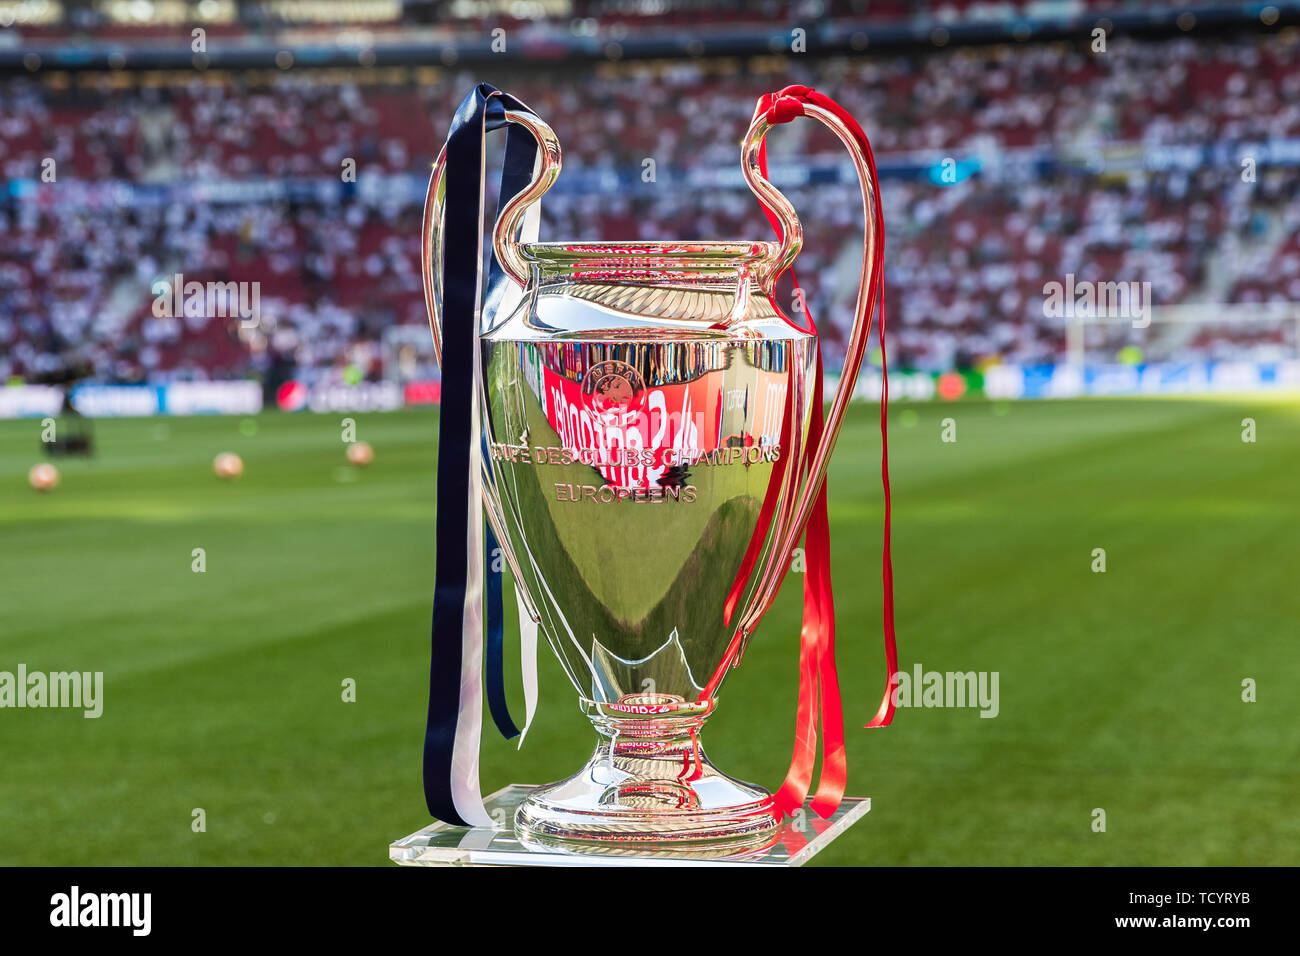 1 june 2019 Madrid, Spain Soccer Champions League Final: Tottenham Hotspur v Liverpool Champions Cup 2018-2019, Europacup 1 Beker, Beker met de grote oren Stock Photo - Alamy